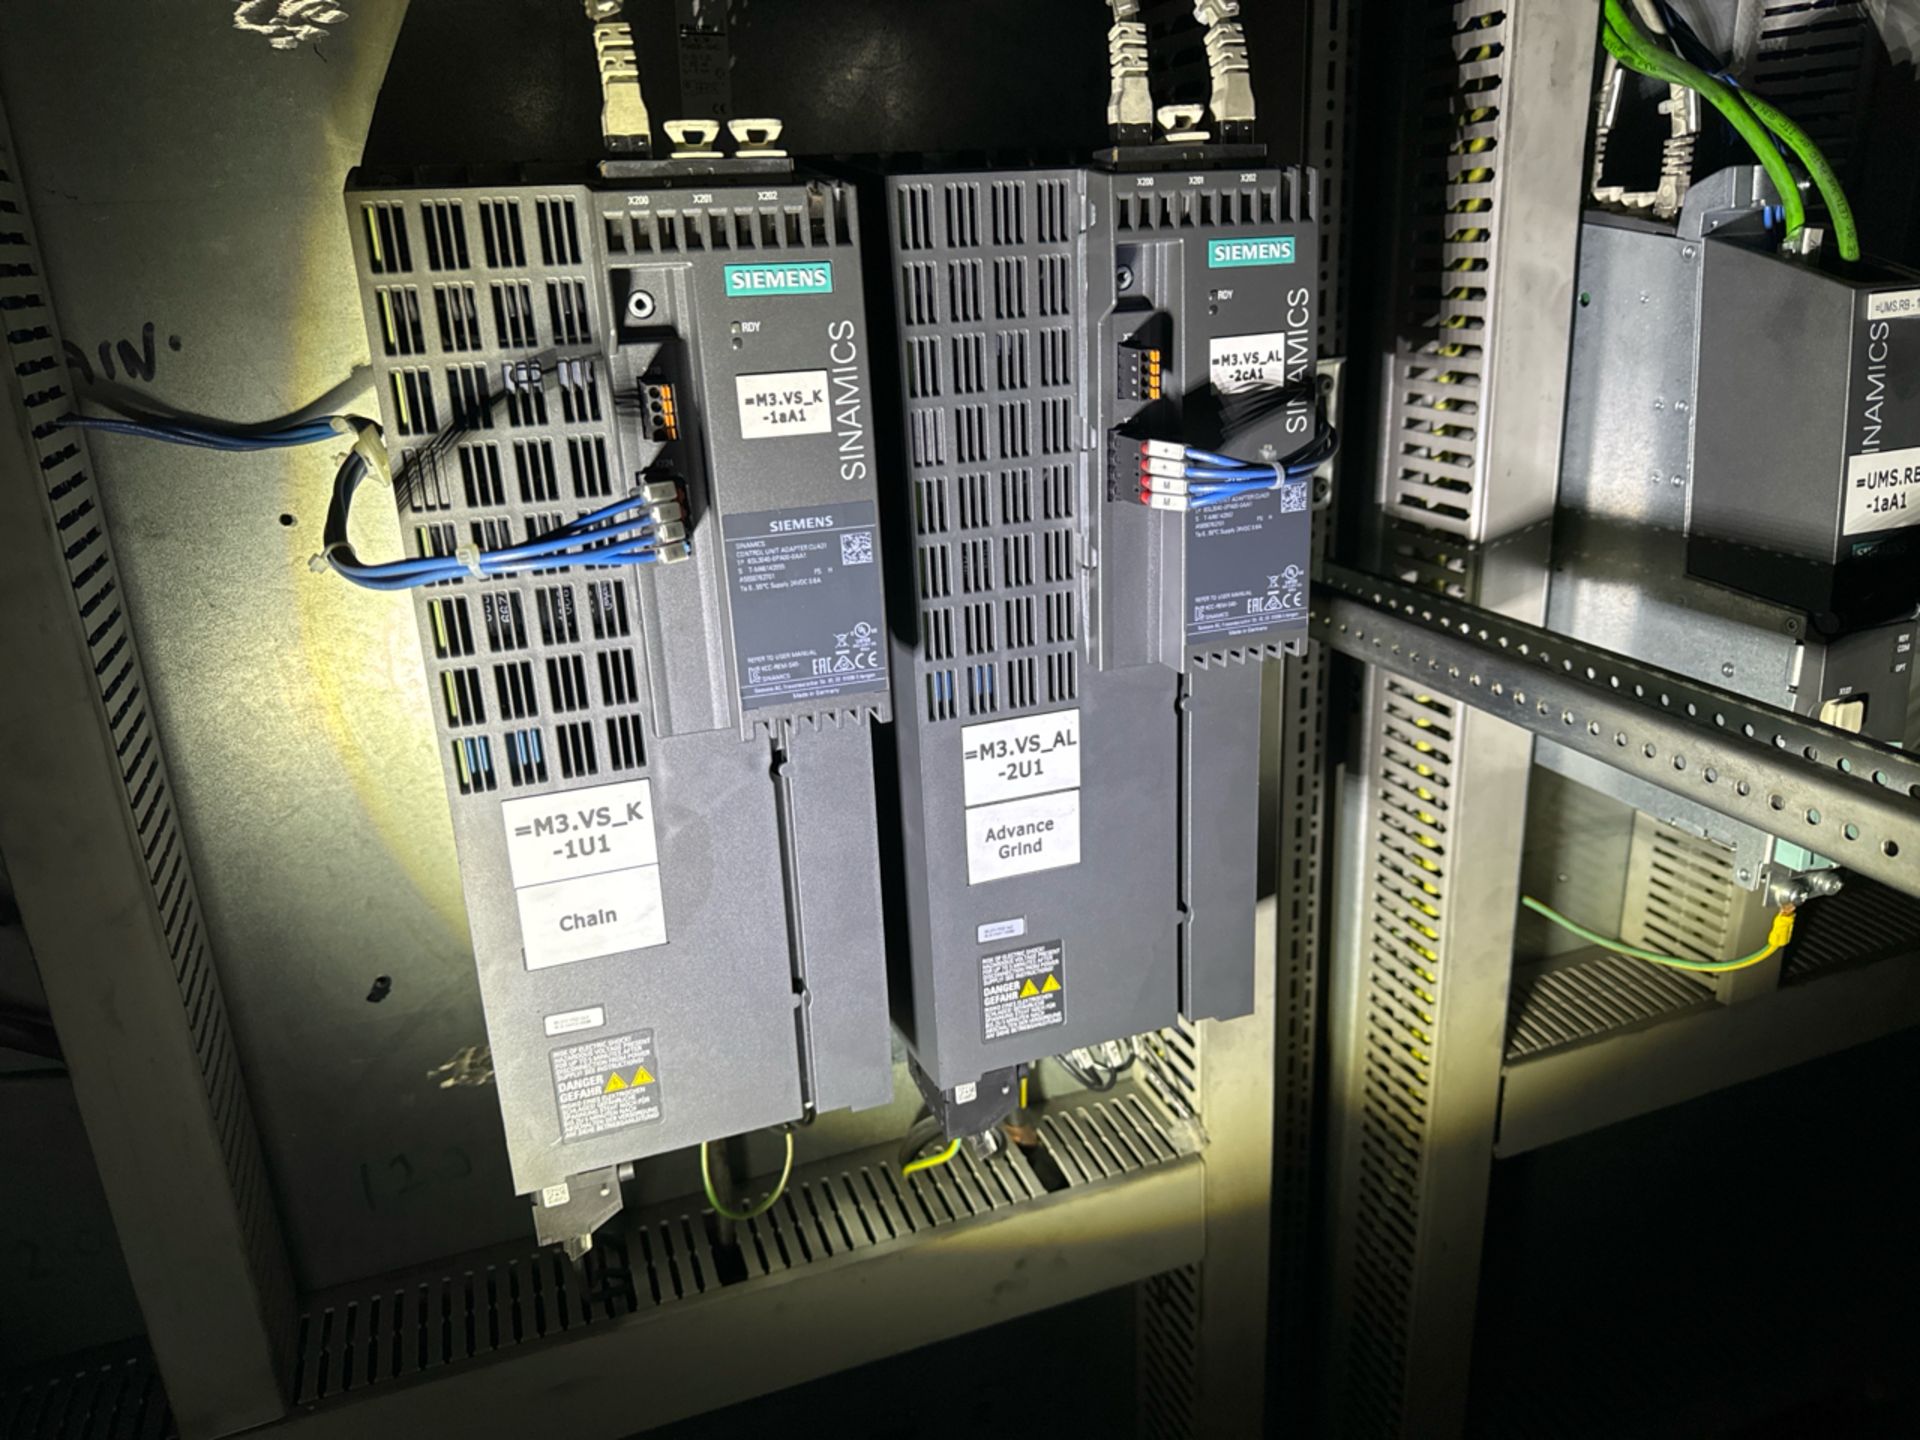 Siemens Sinamics Control Adapter CUA31 2x Units